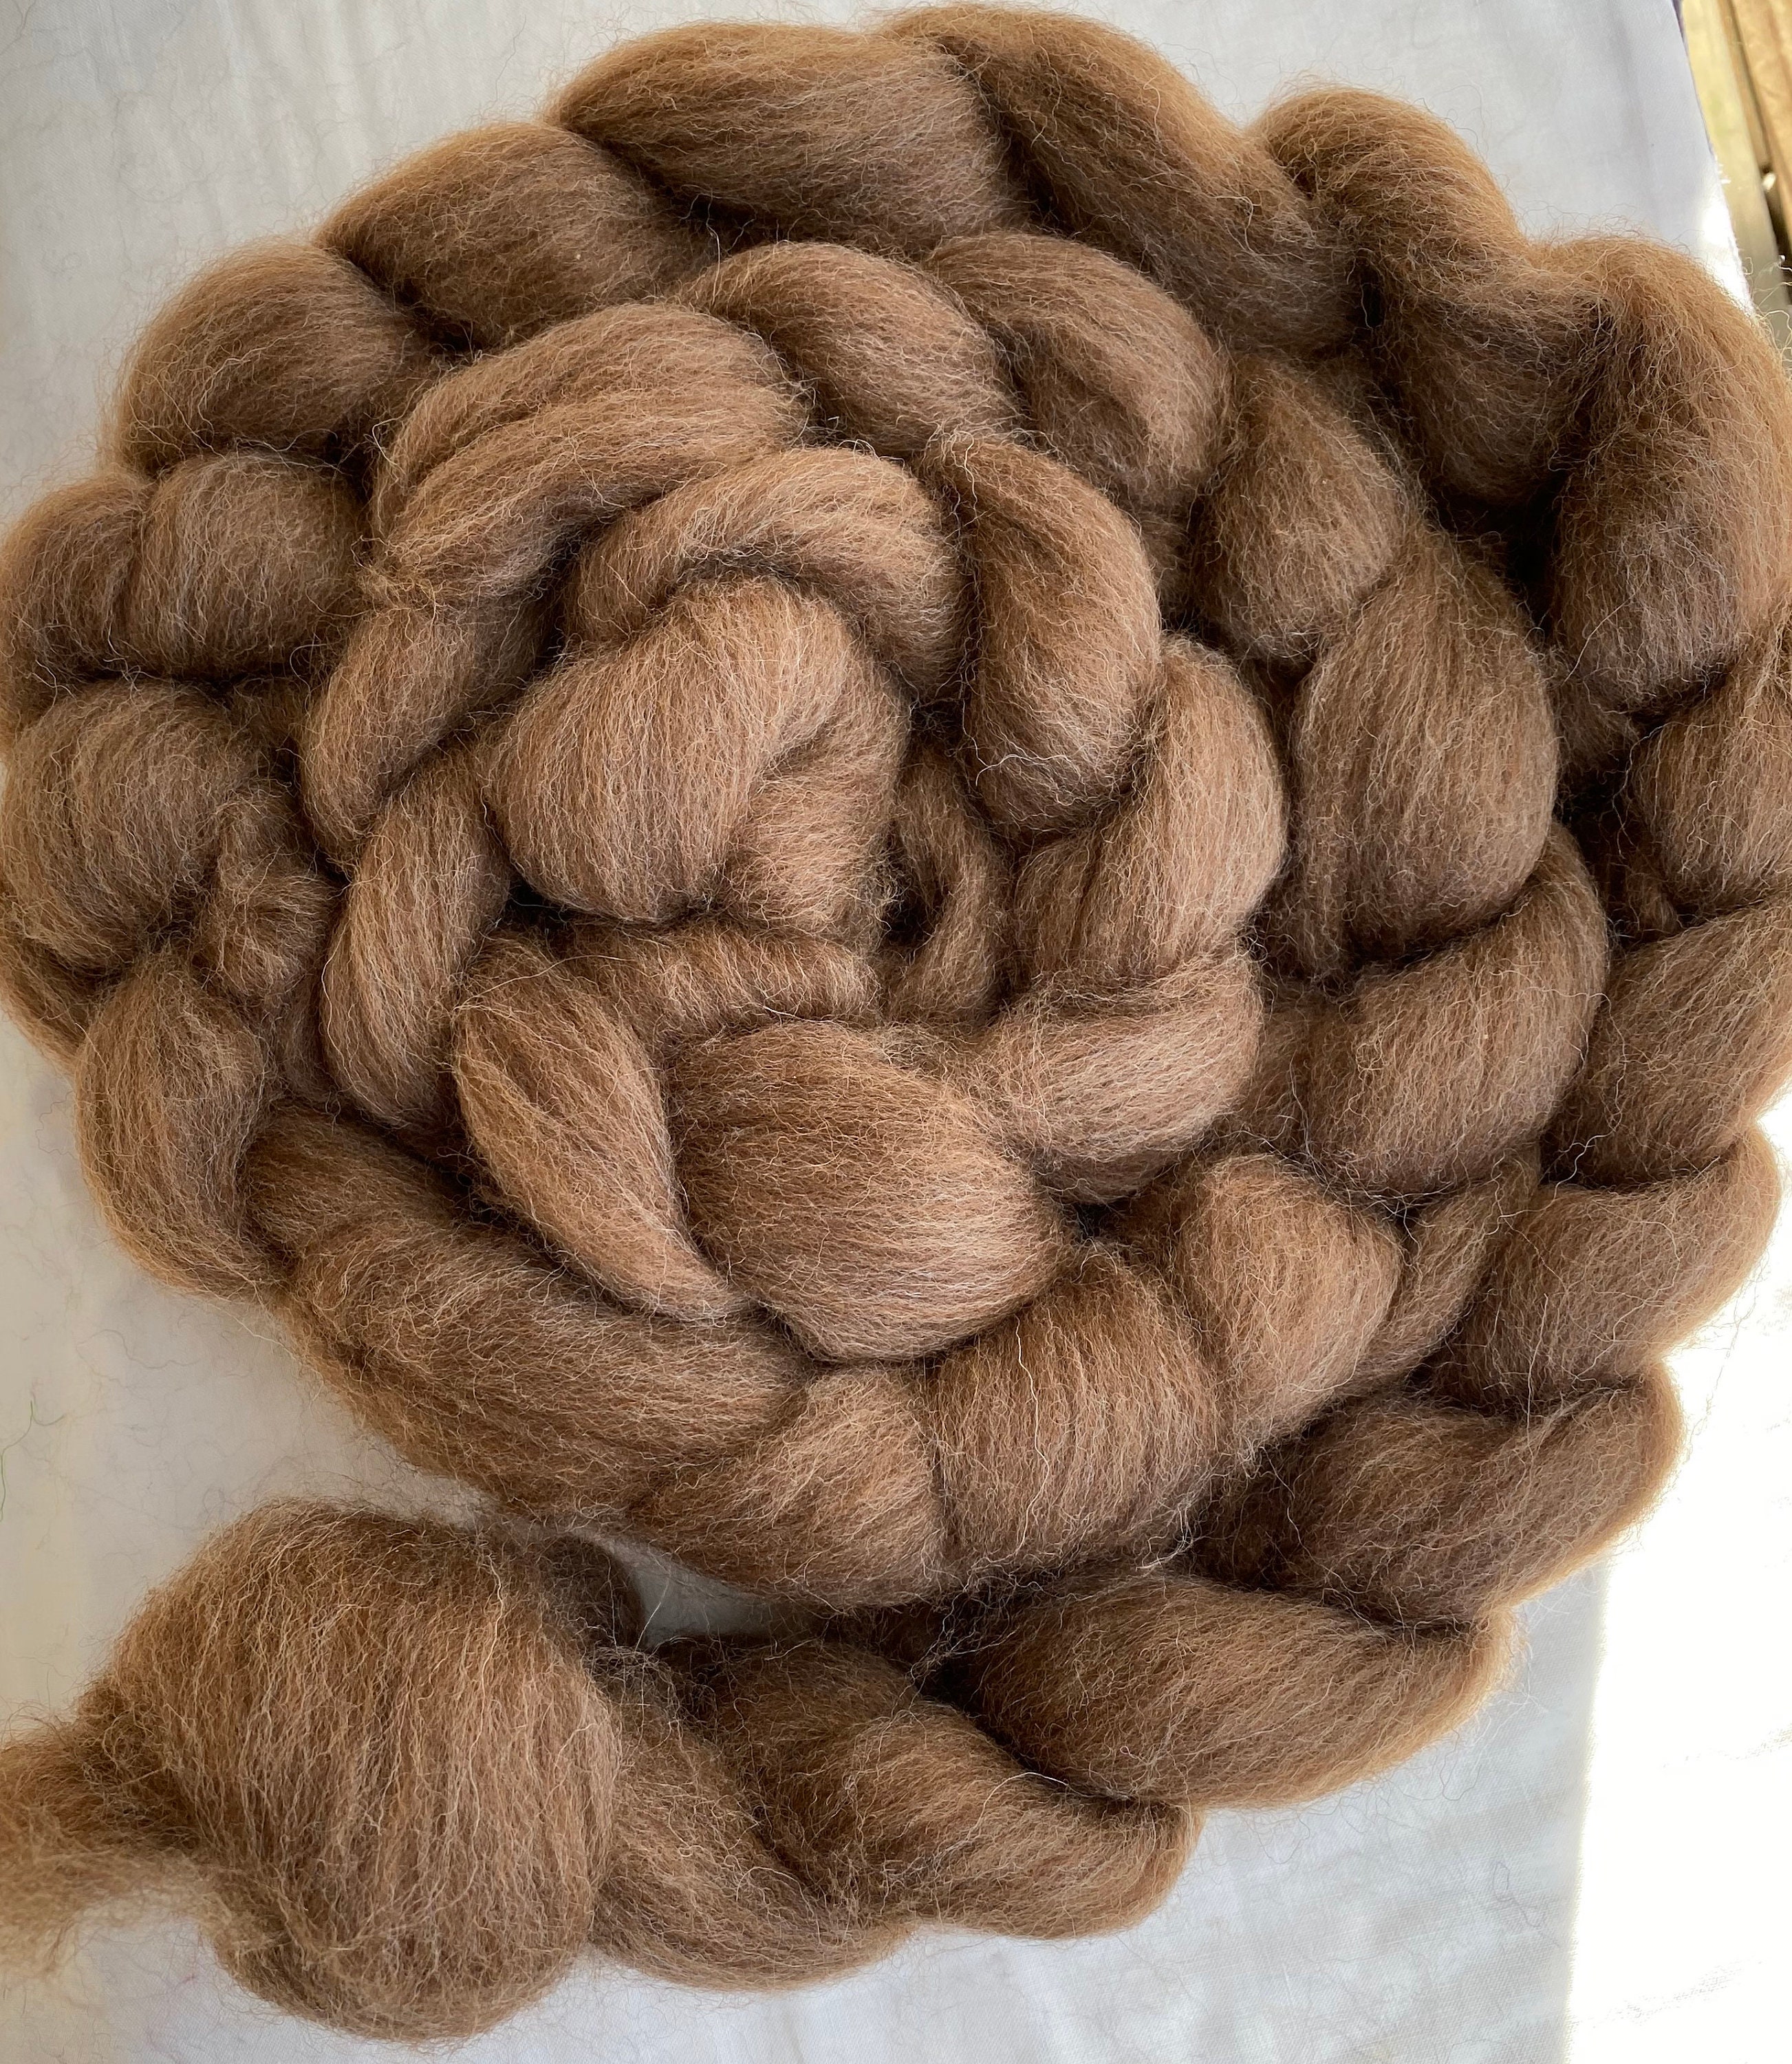 Revolution Fibers Corriedale Wool Roving 1 lb (16 Ounces) for Spinning, Soft Chunky Jumbo Yarn for Arm Knitting Blanket